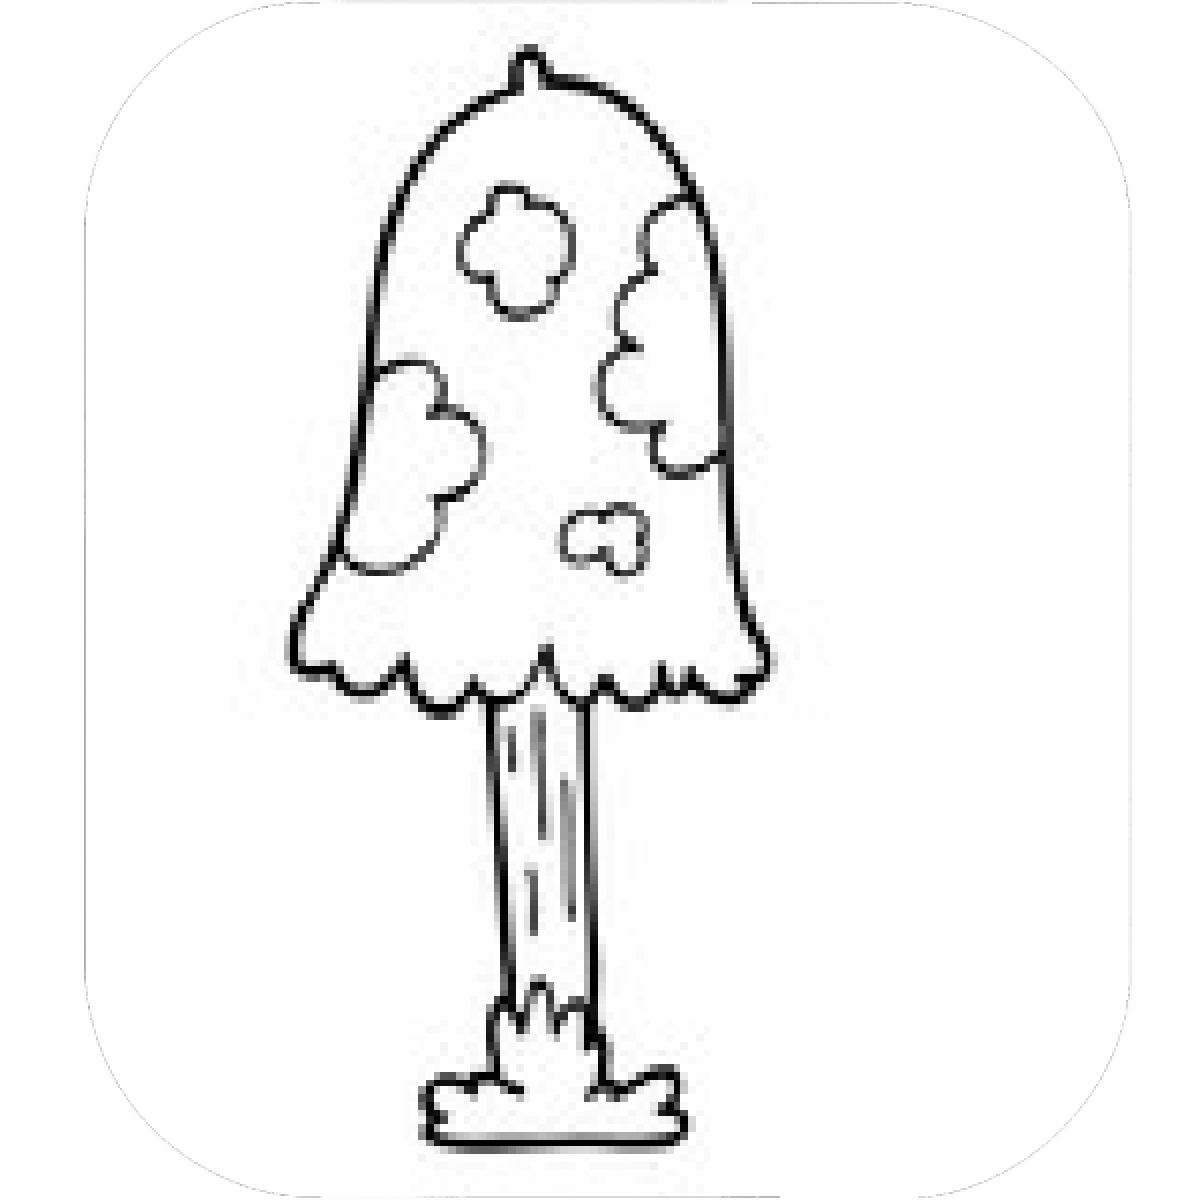 Mushroom Cartoon Drawing | Free download on ClipArtMag